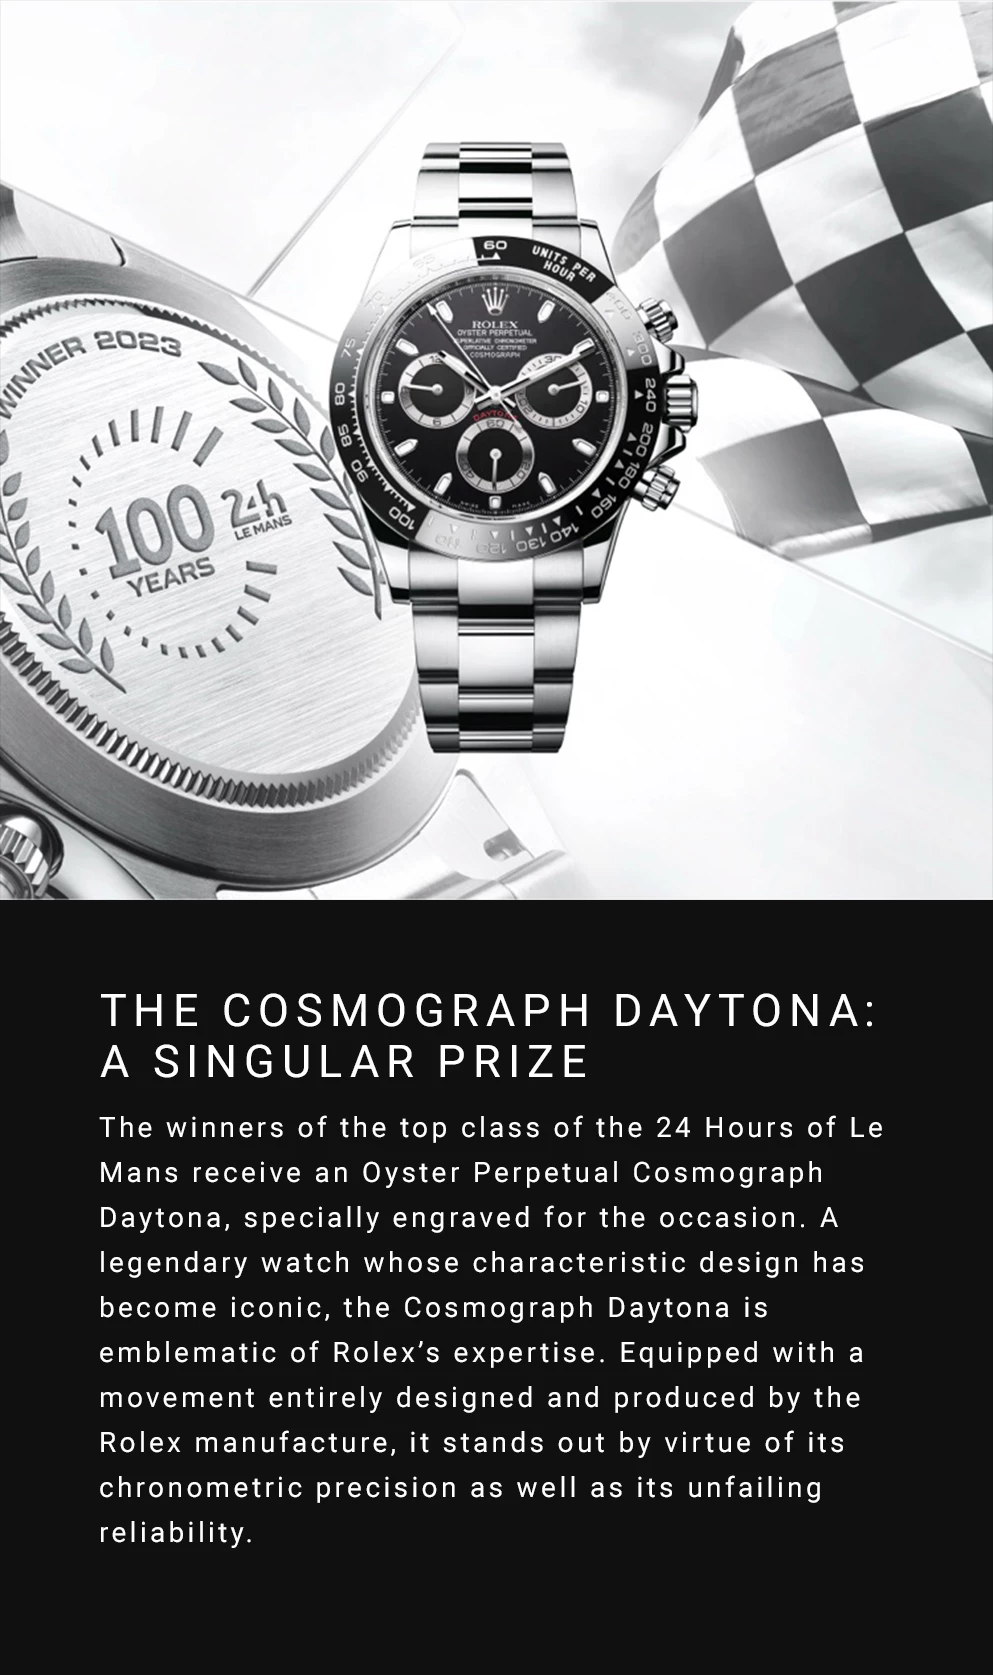 The Cosmograph Daytona: a singular prize